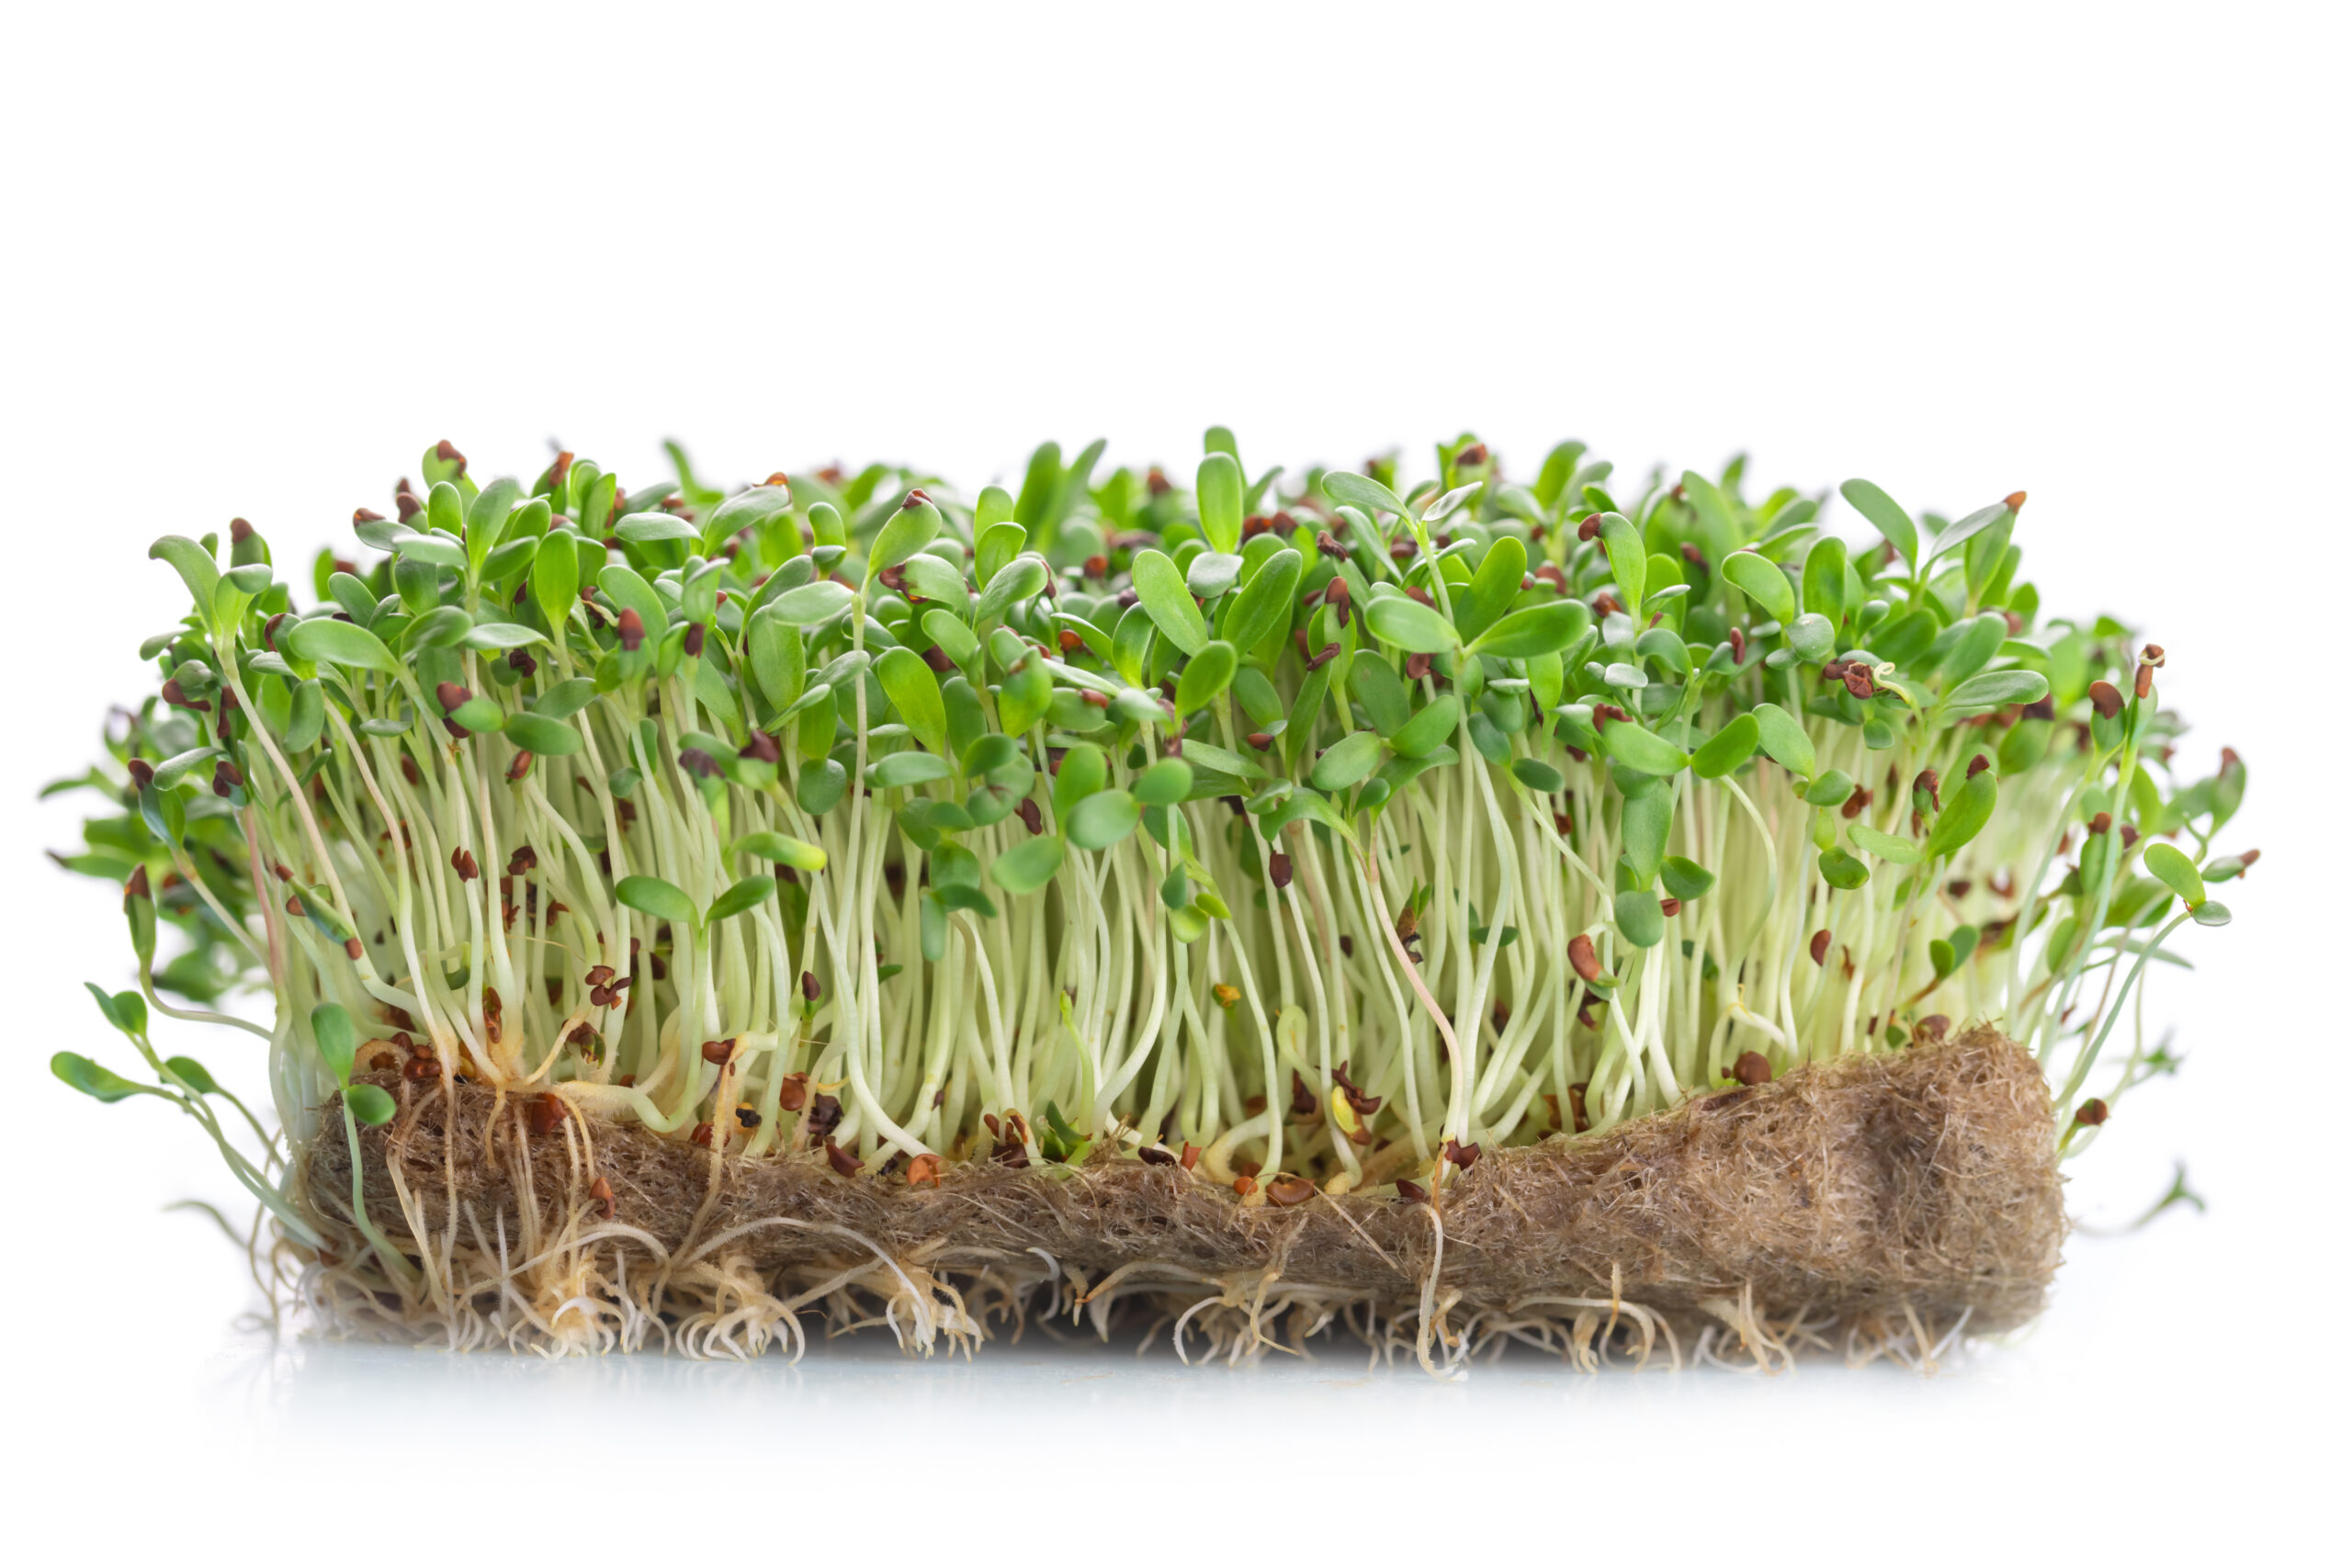 Alfalfa grass